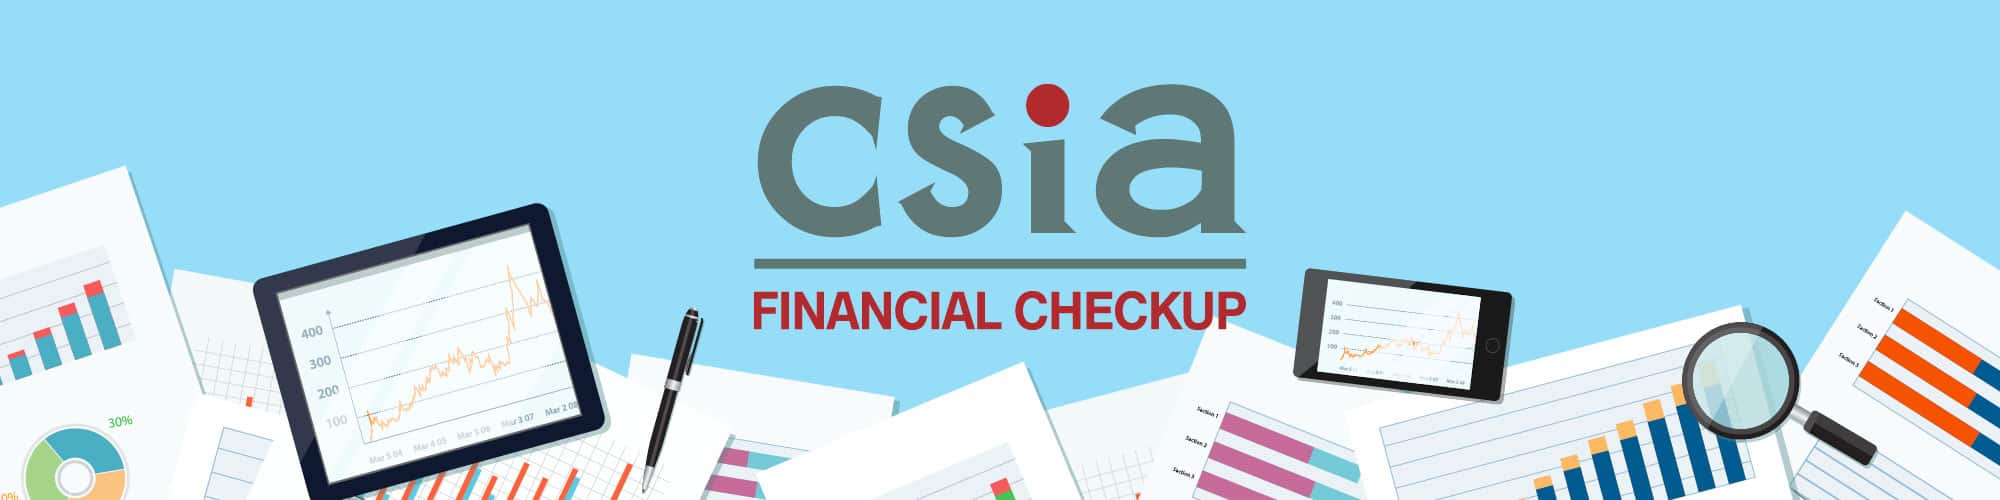 CSIA Financial Checkup